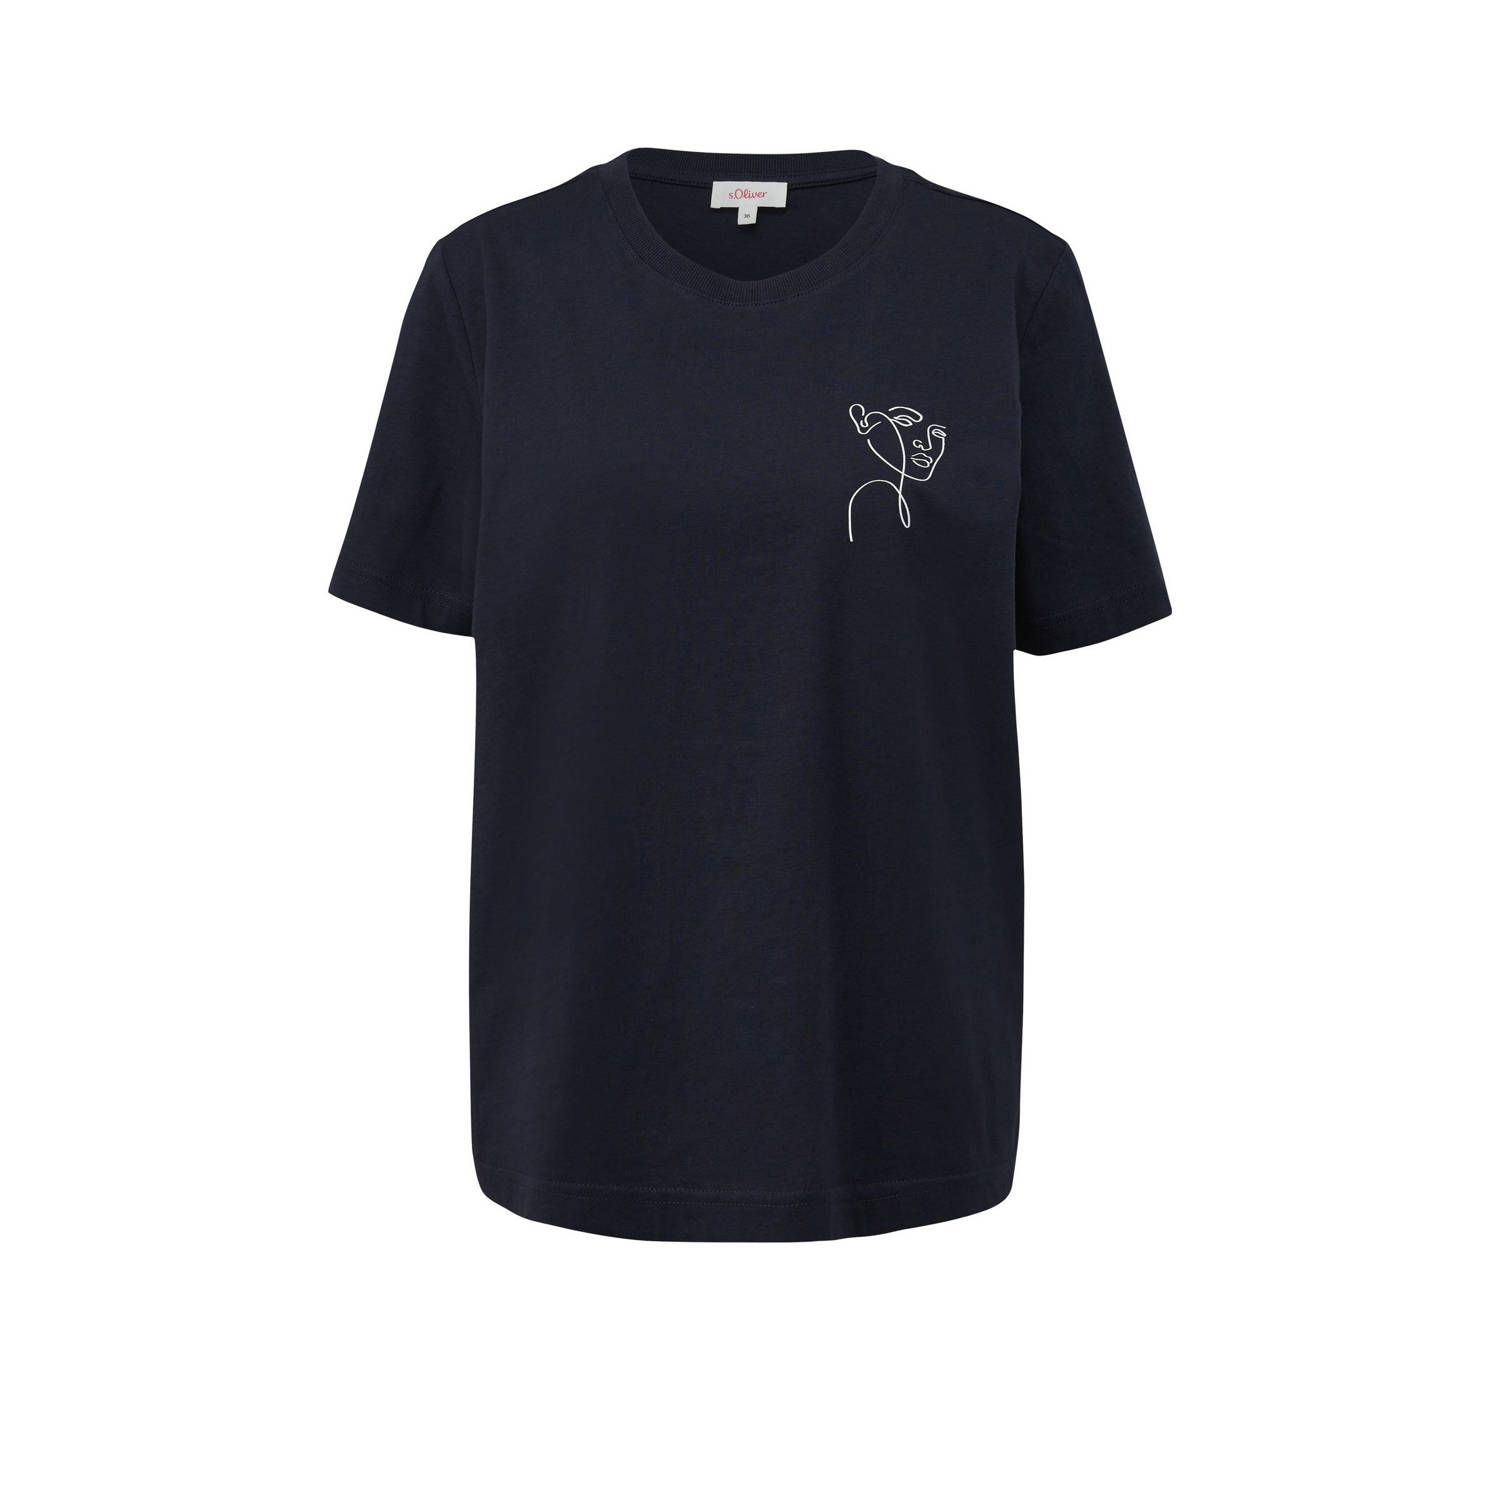 S.Oliver T-shirt met printopdruk marine wit